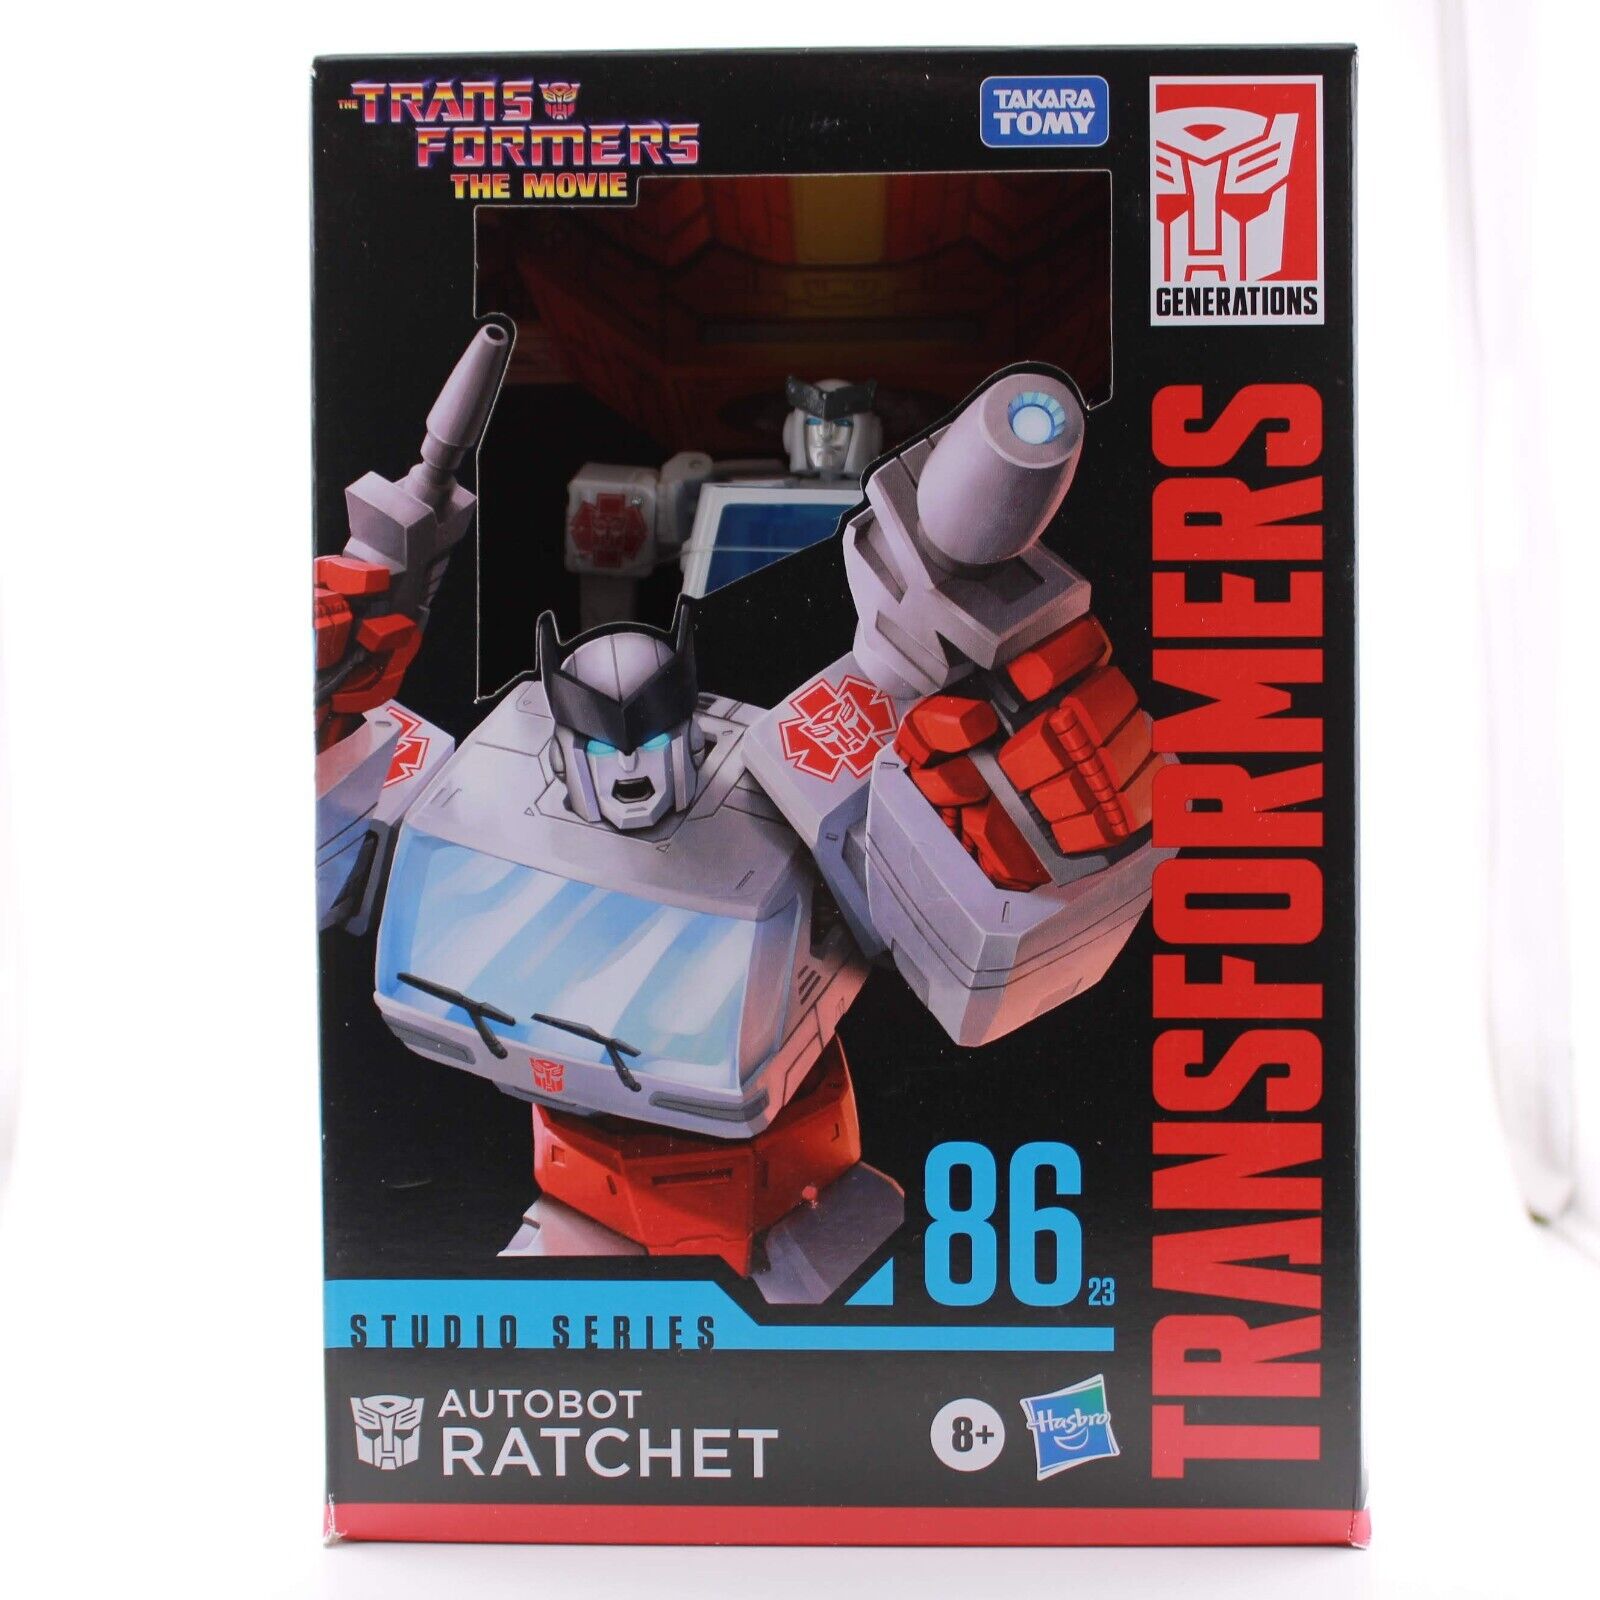 Transformers The Movie Autobot Ratchet Studio Series 86 Voyager Class Figure G1